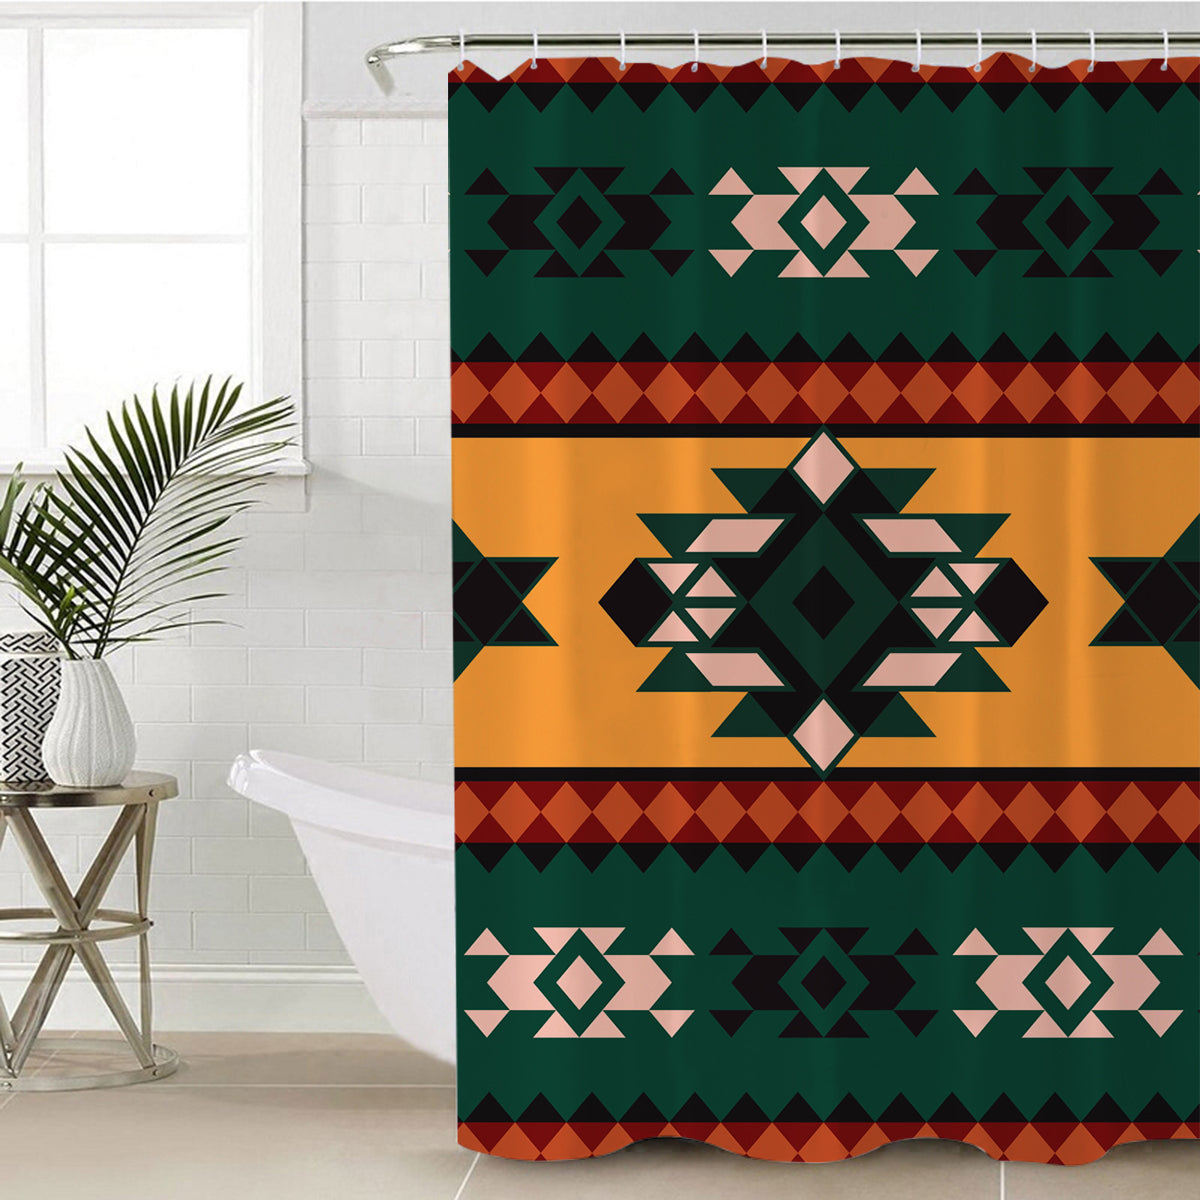 aztec-geometric-pattern-shower-curtain